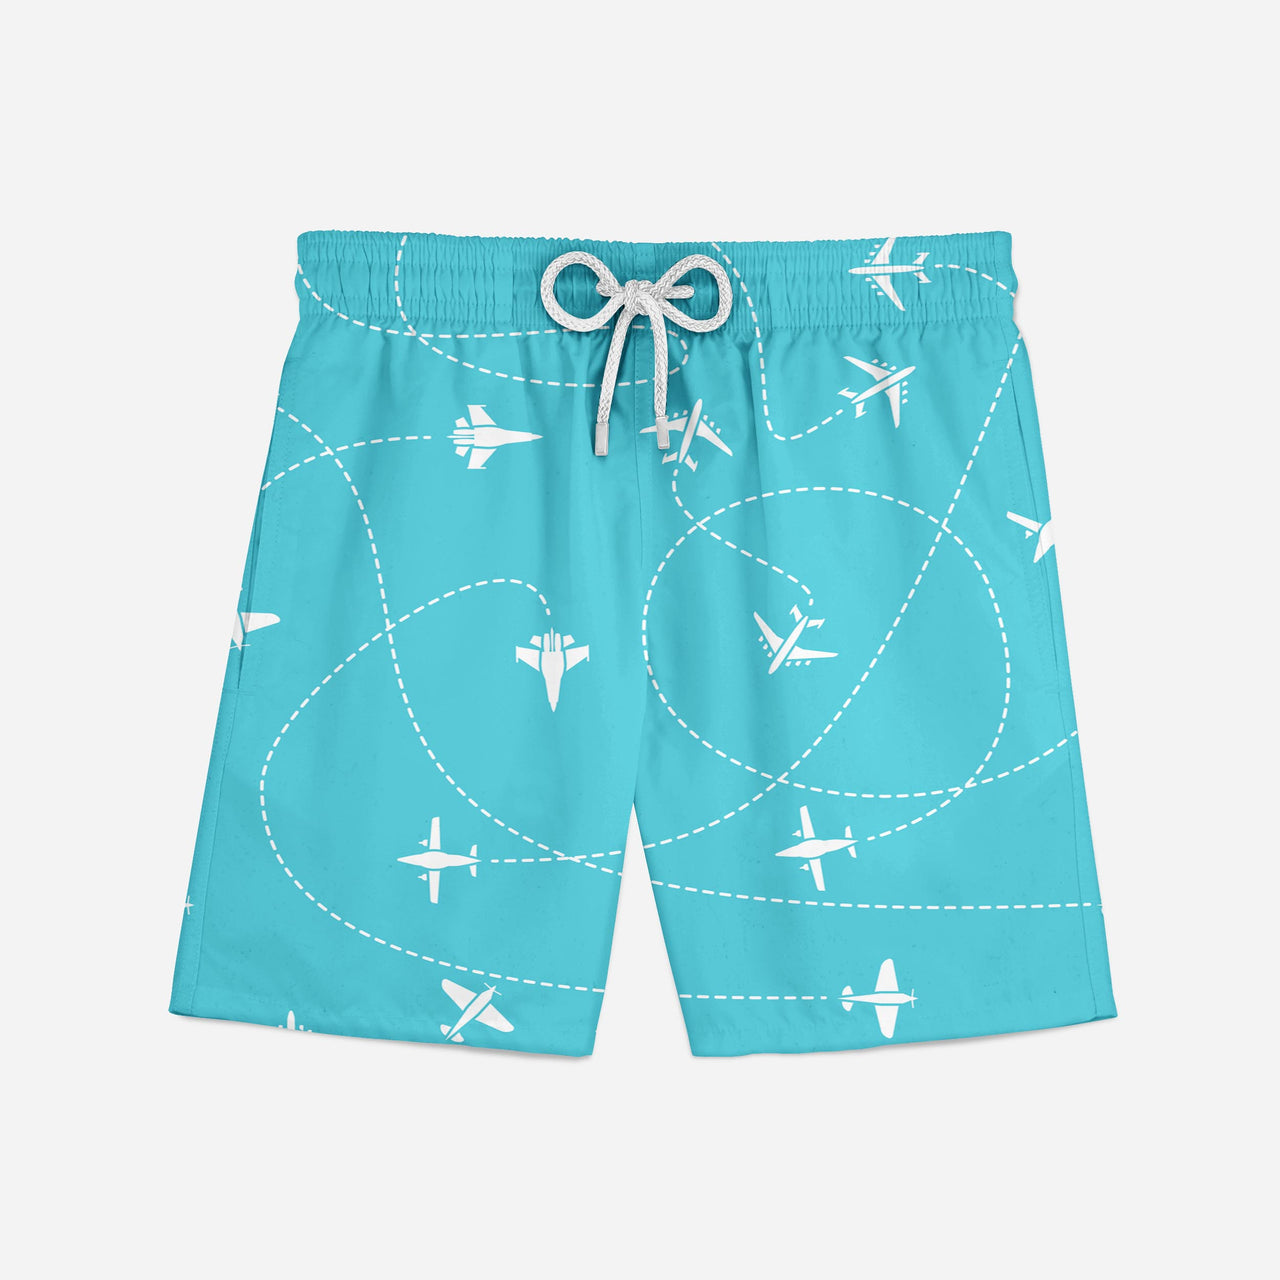 Travel The World By Plane Designed Swim Trunks & Shorts